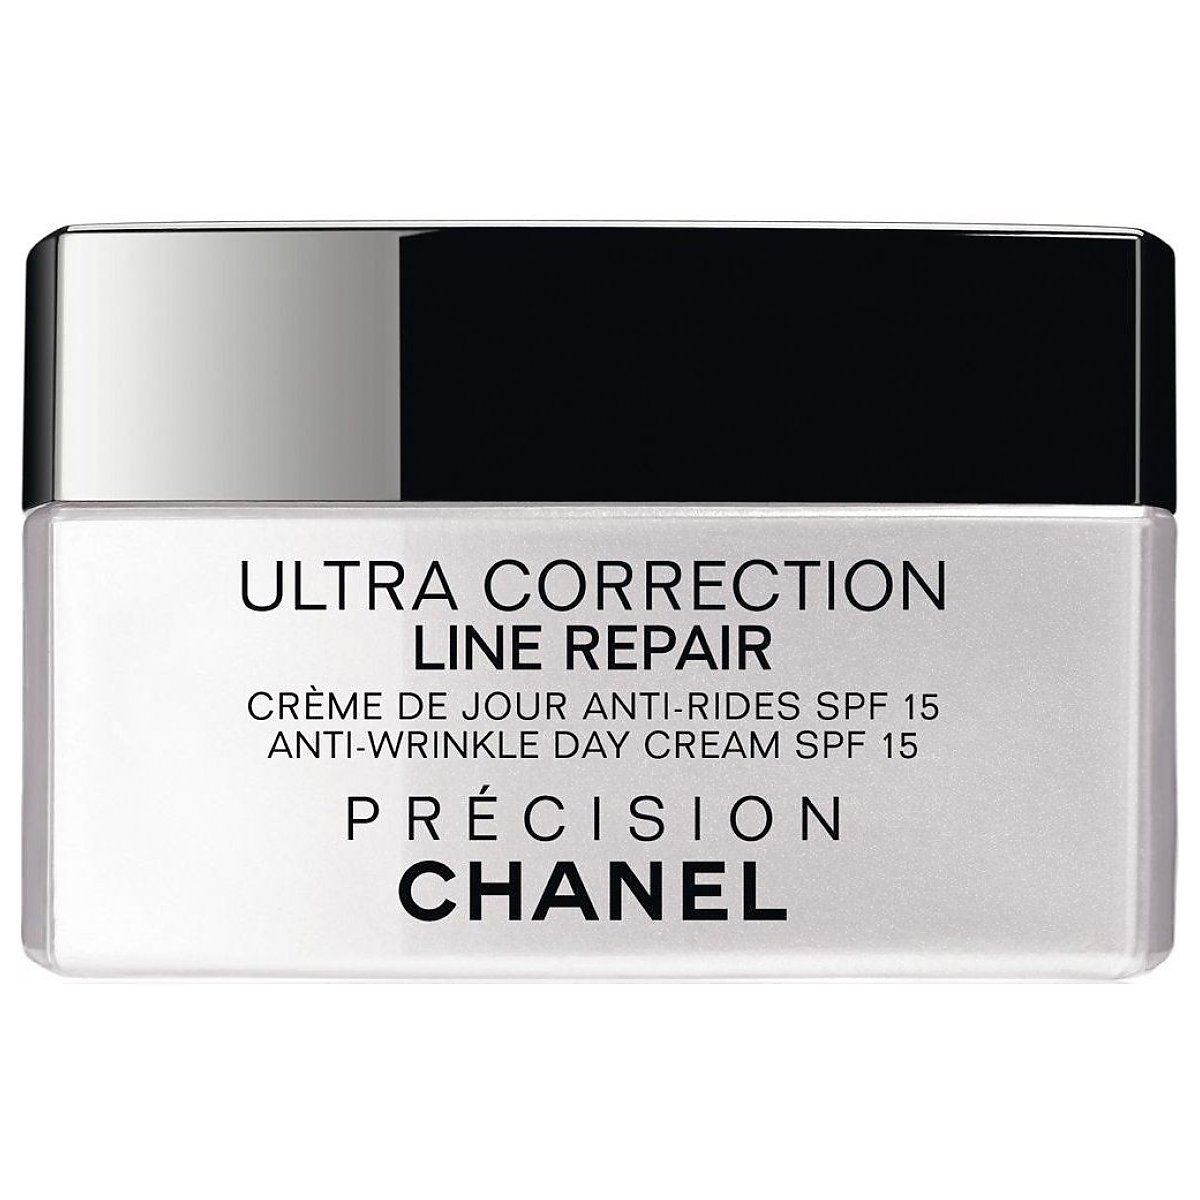 CHANEL Ultra Correction Line Repair Anti-Wrinkle Day Cream Krem